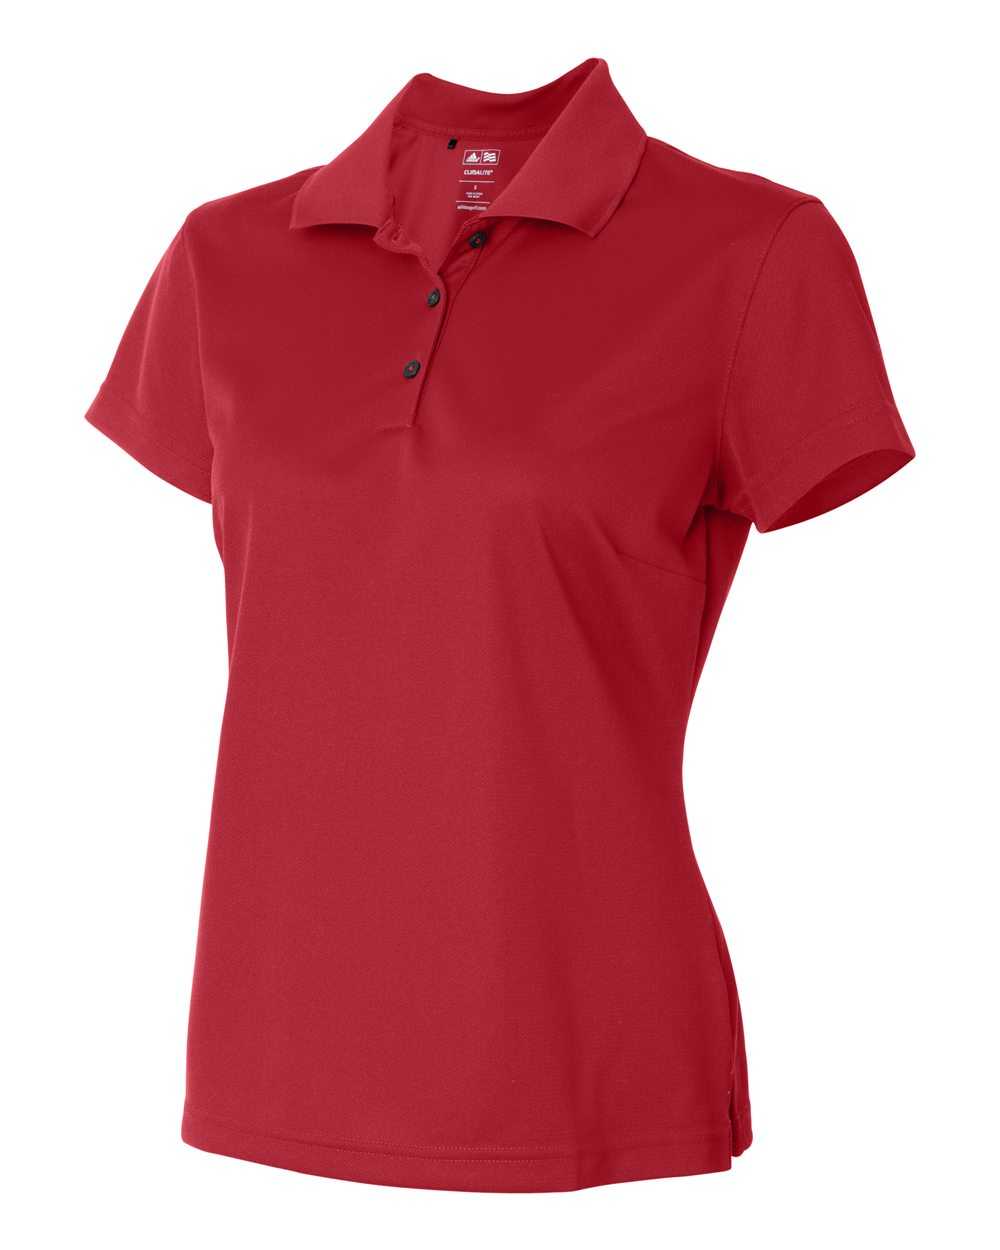 Adidas A131 Women's Basic Sport Shirt - Power RedWhite - HIT a Double